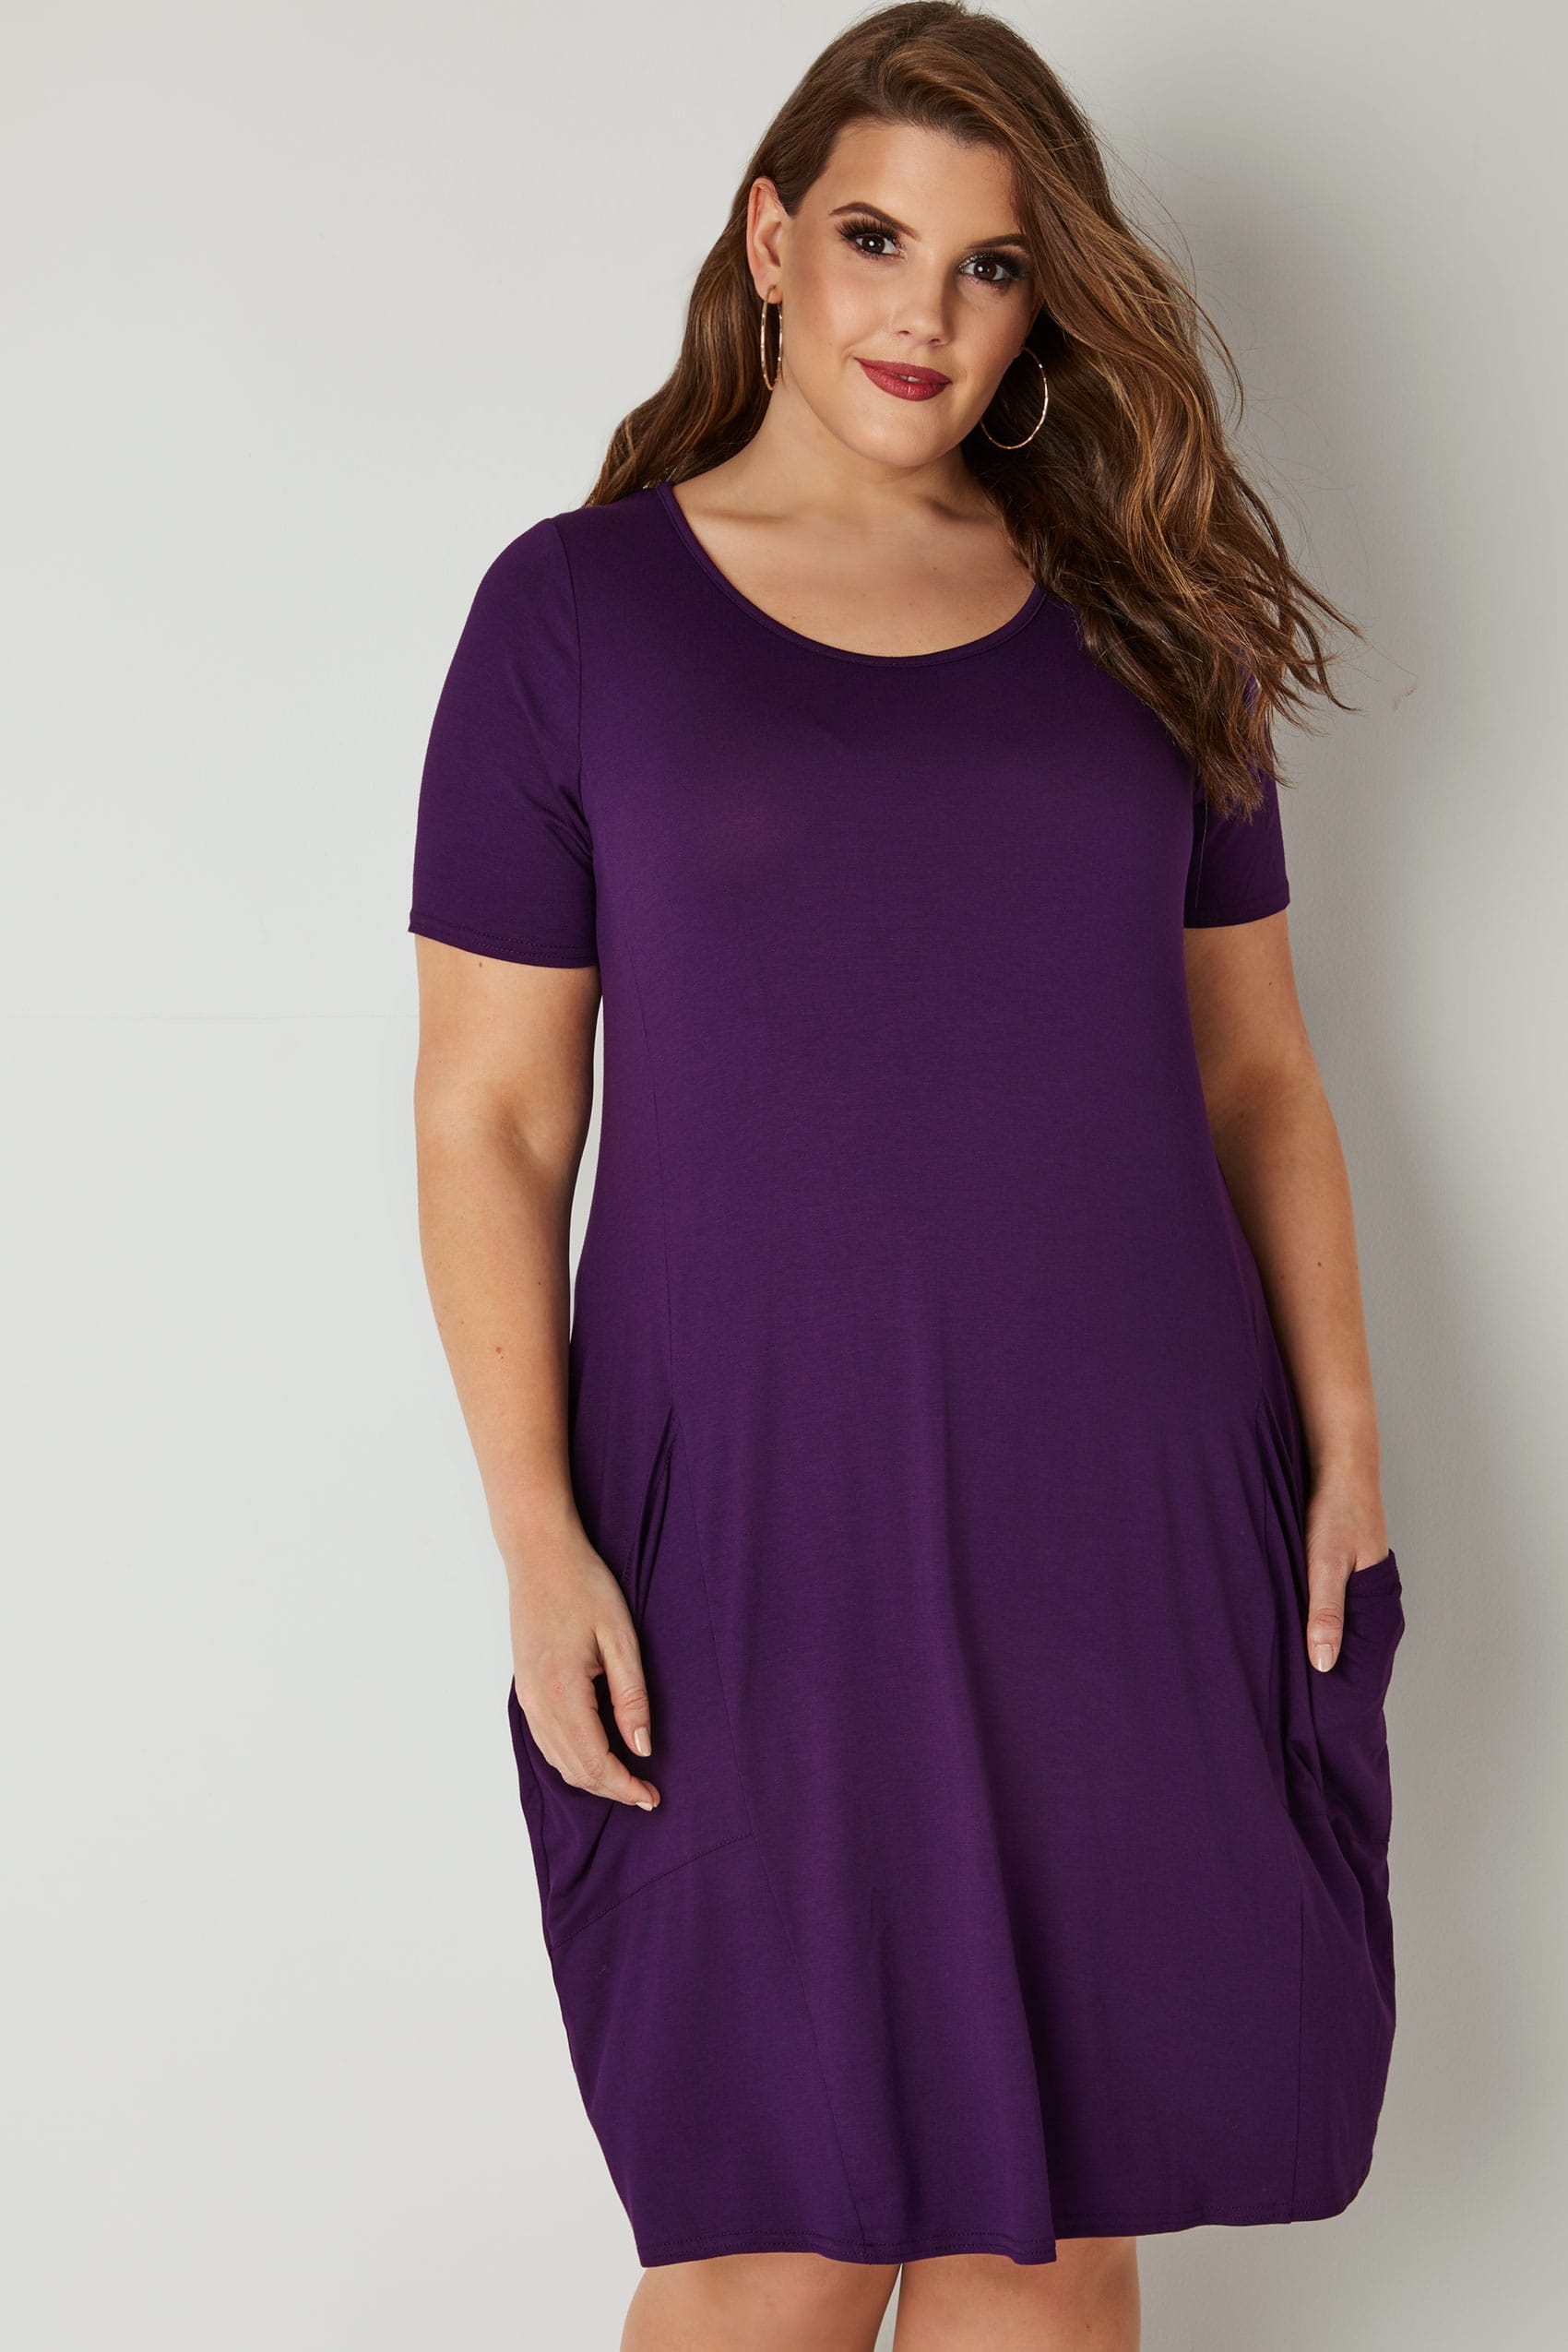 Dark Purple Draped Pocket Jersey Dress, plus size 16 to 36